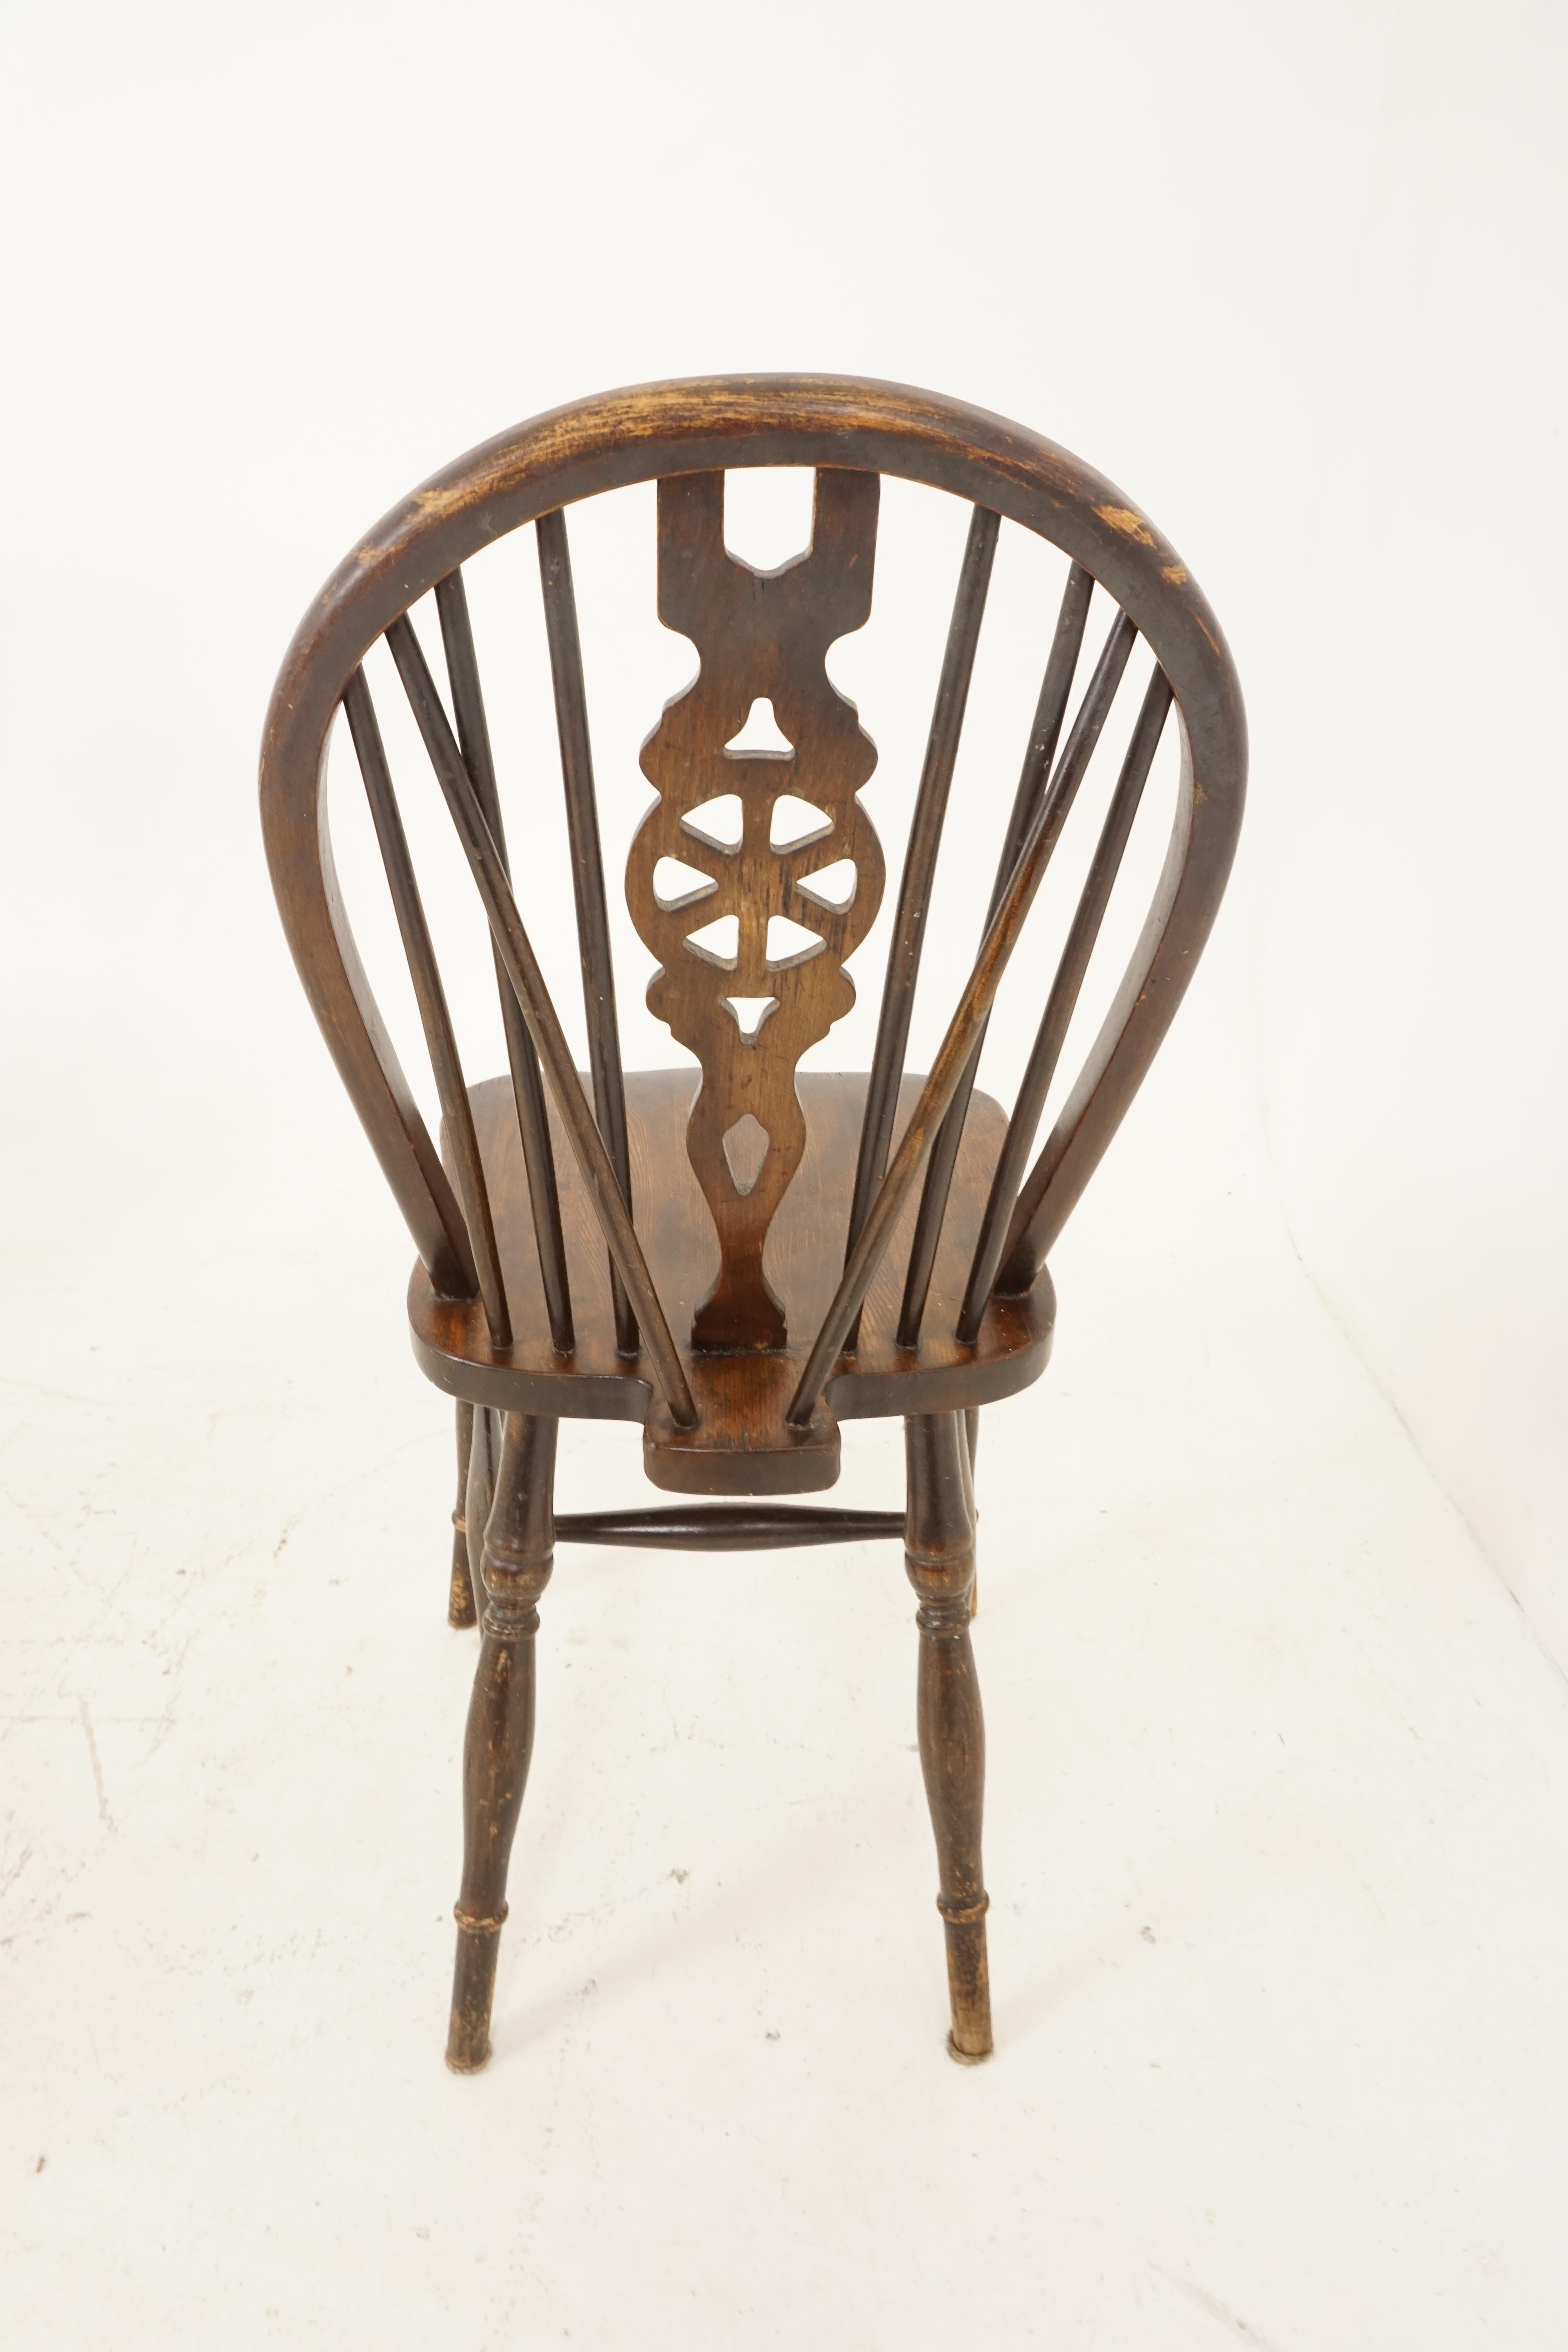 4 Vintage Beechwood Chairs, Wheelback Windsor Chairs, Canada 1940, B2270 1